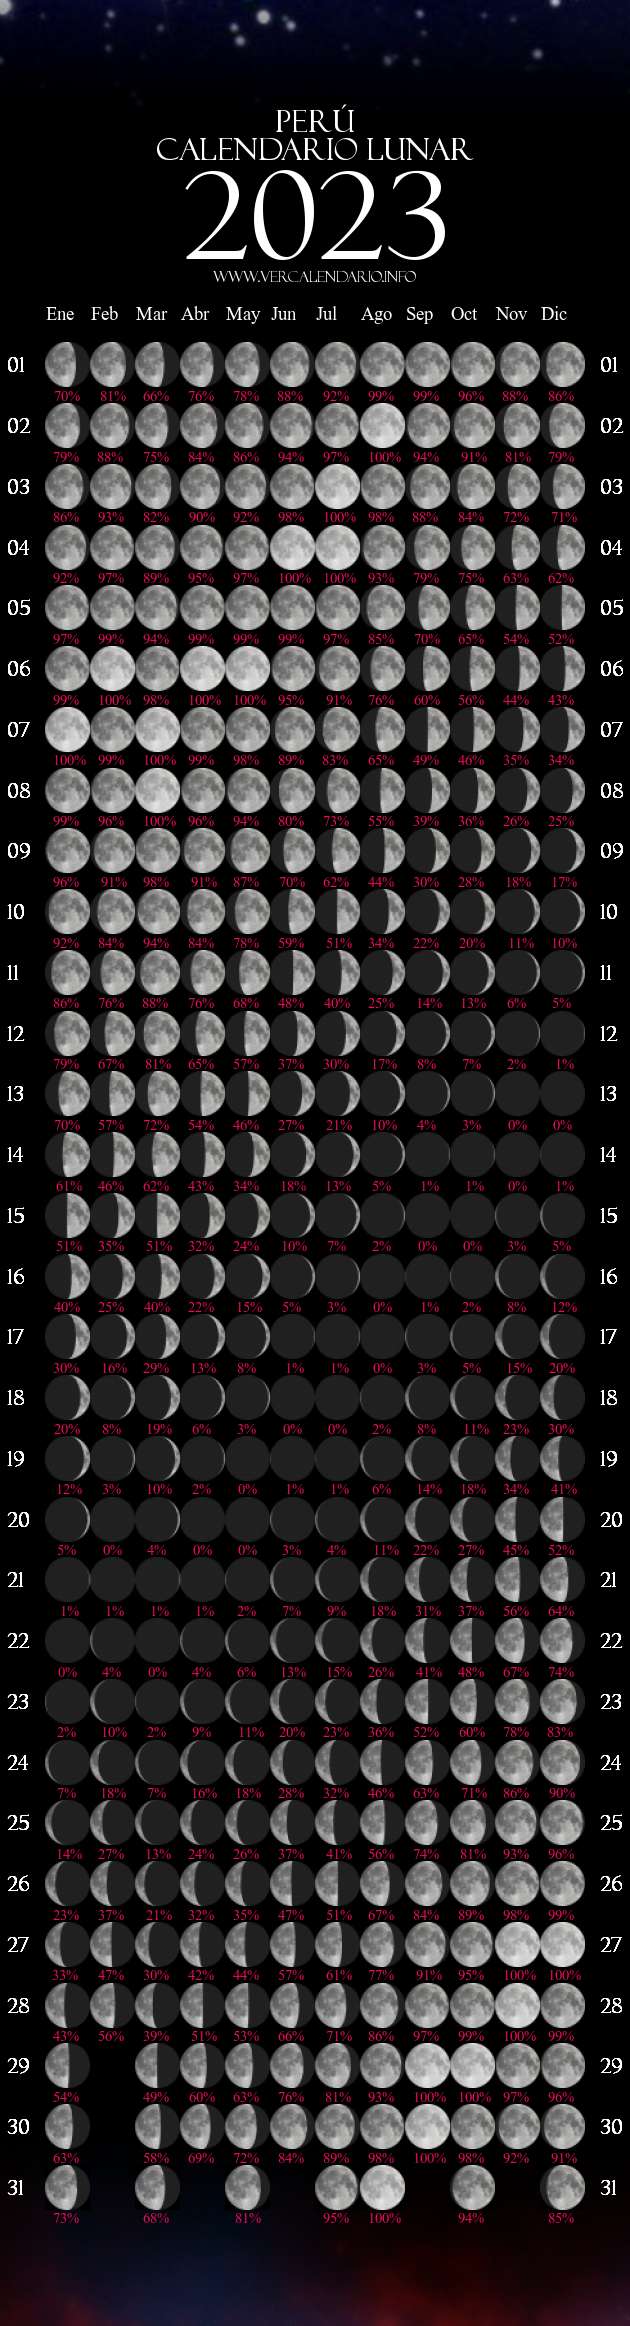 Calendario Lunar 2023 (Perú)